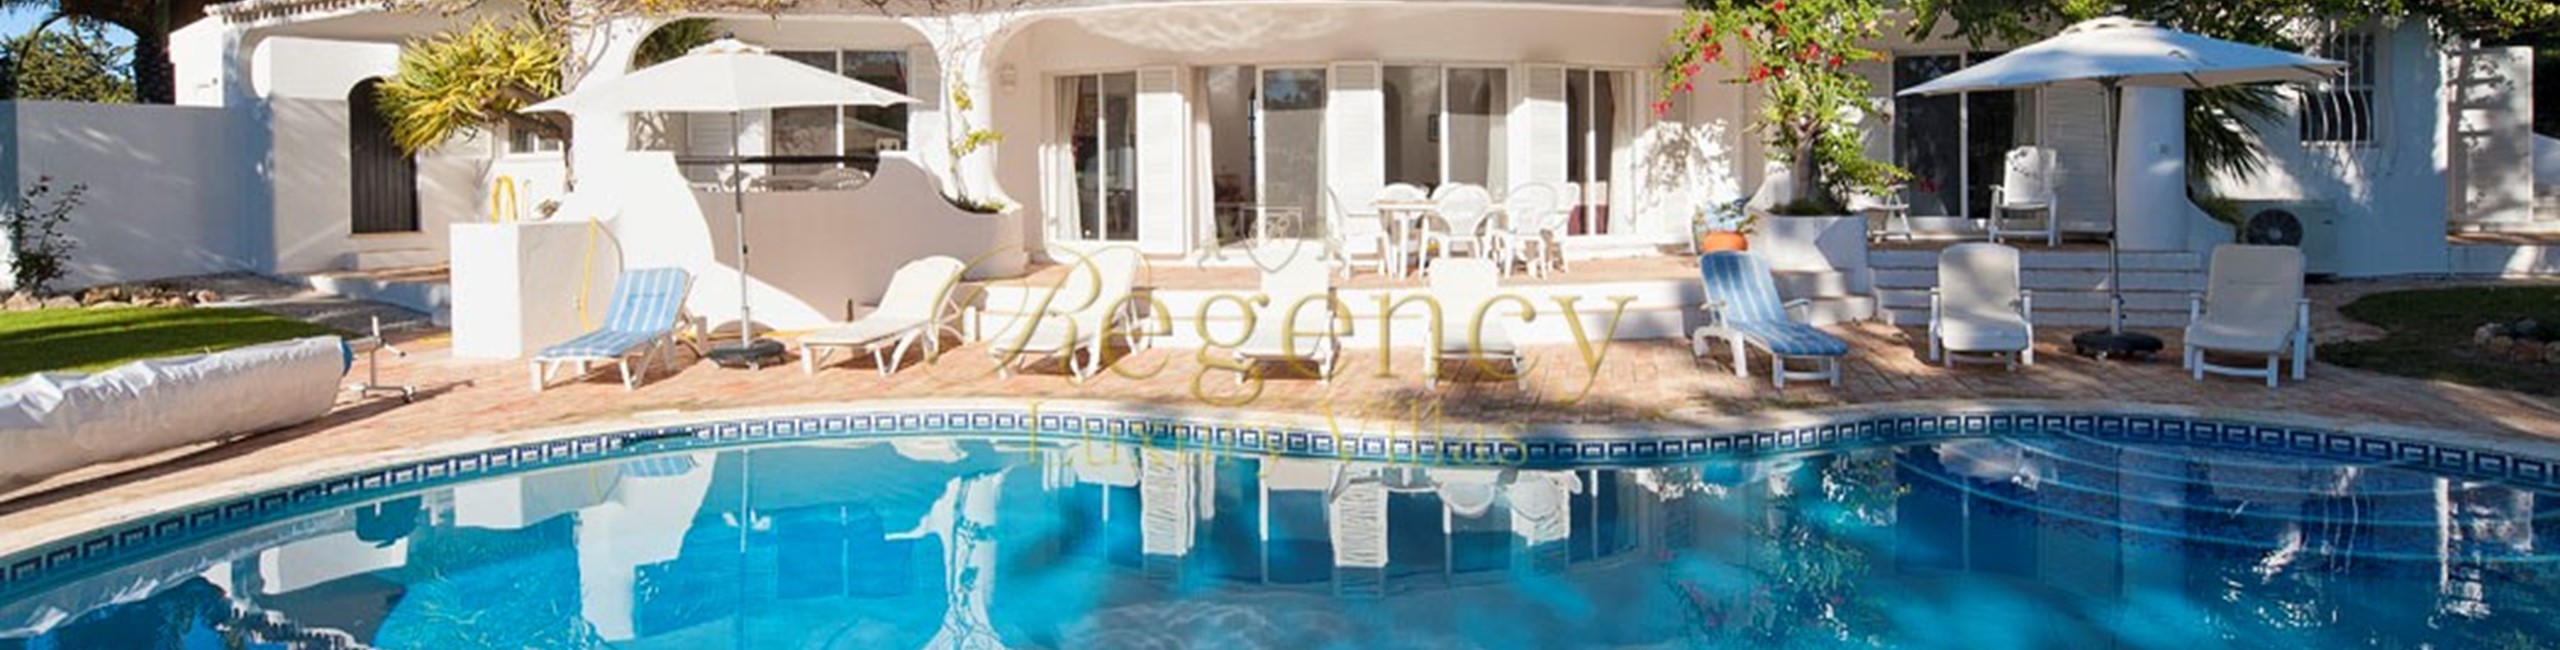 5 Bed Luxury Villa To Rent In Quinta Do Lago RLV 1